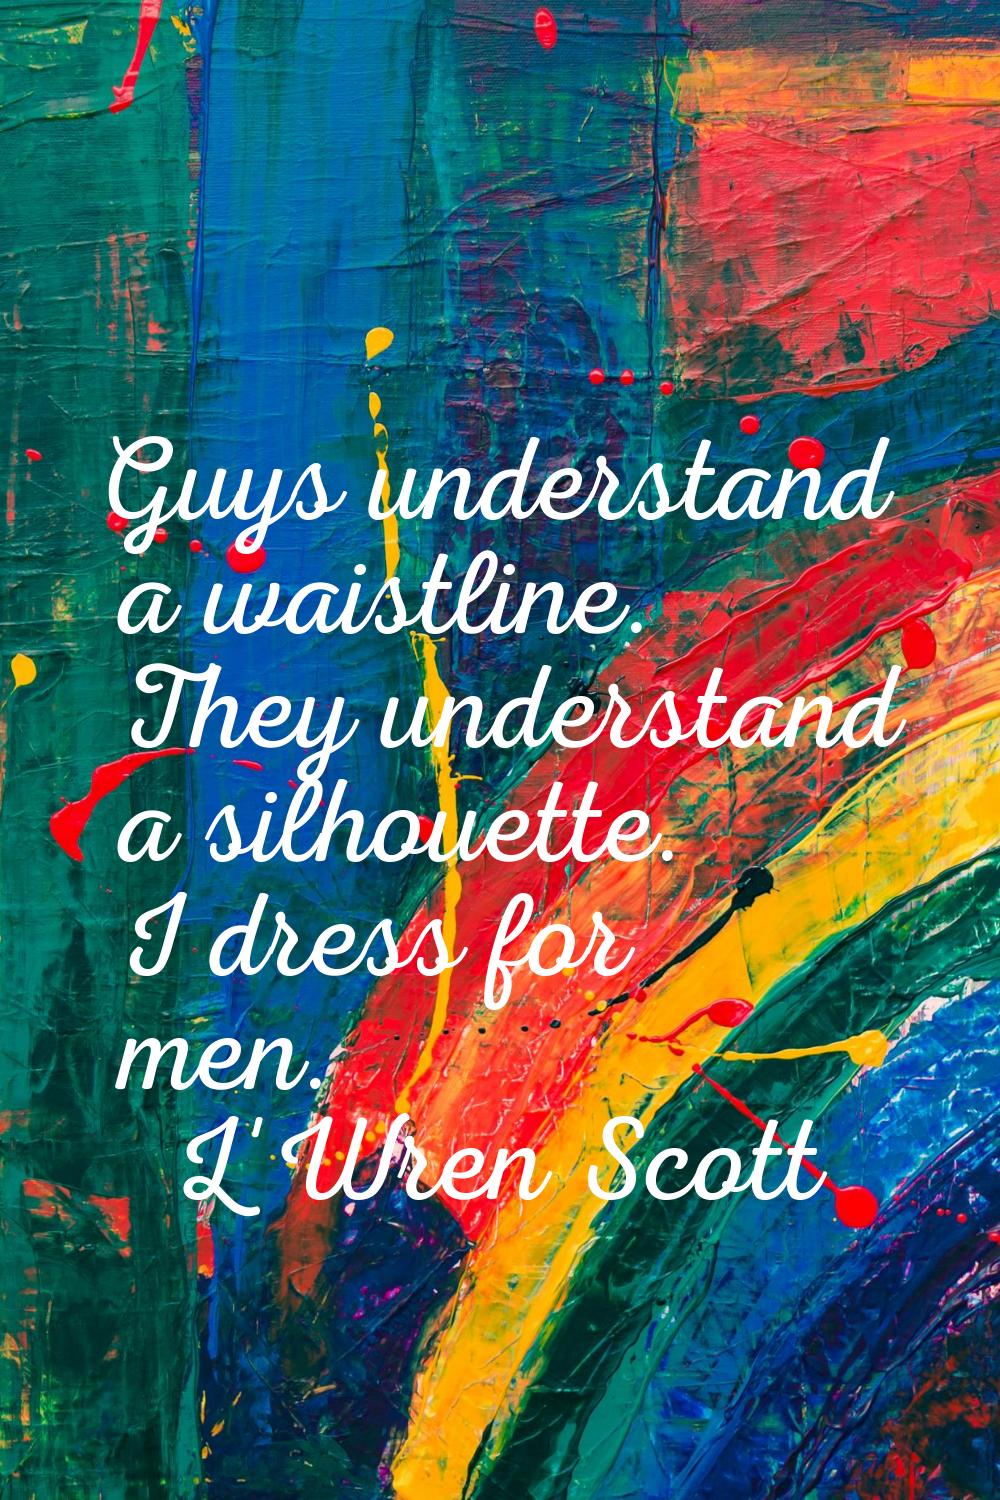 Guys understand a waistline. They understand a silhouette. I dress for men.